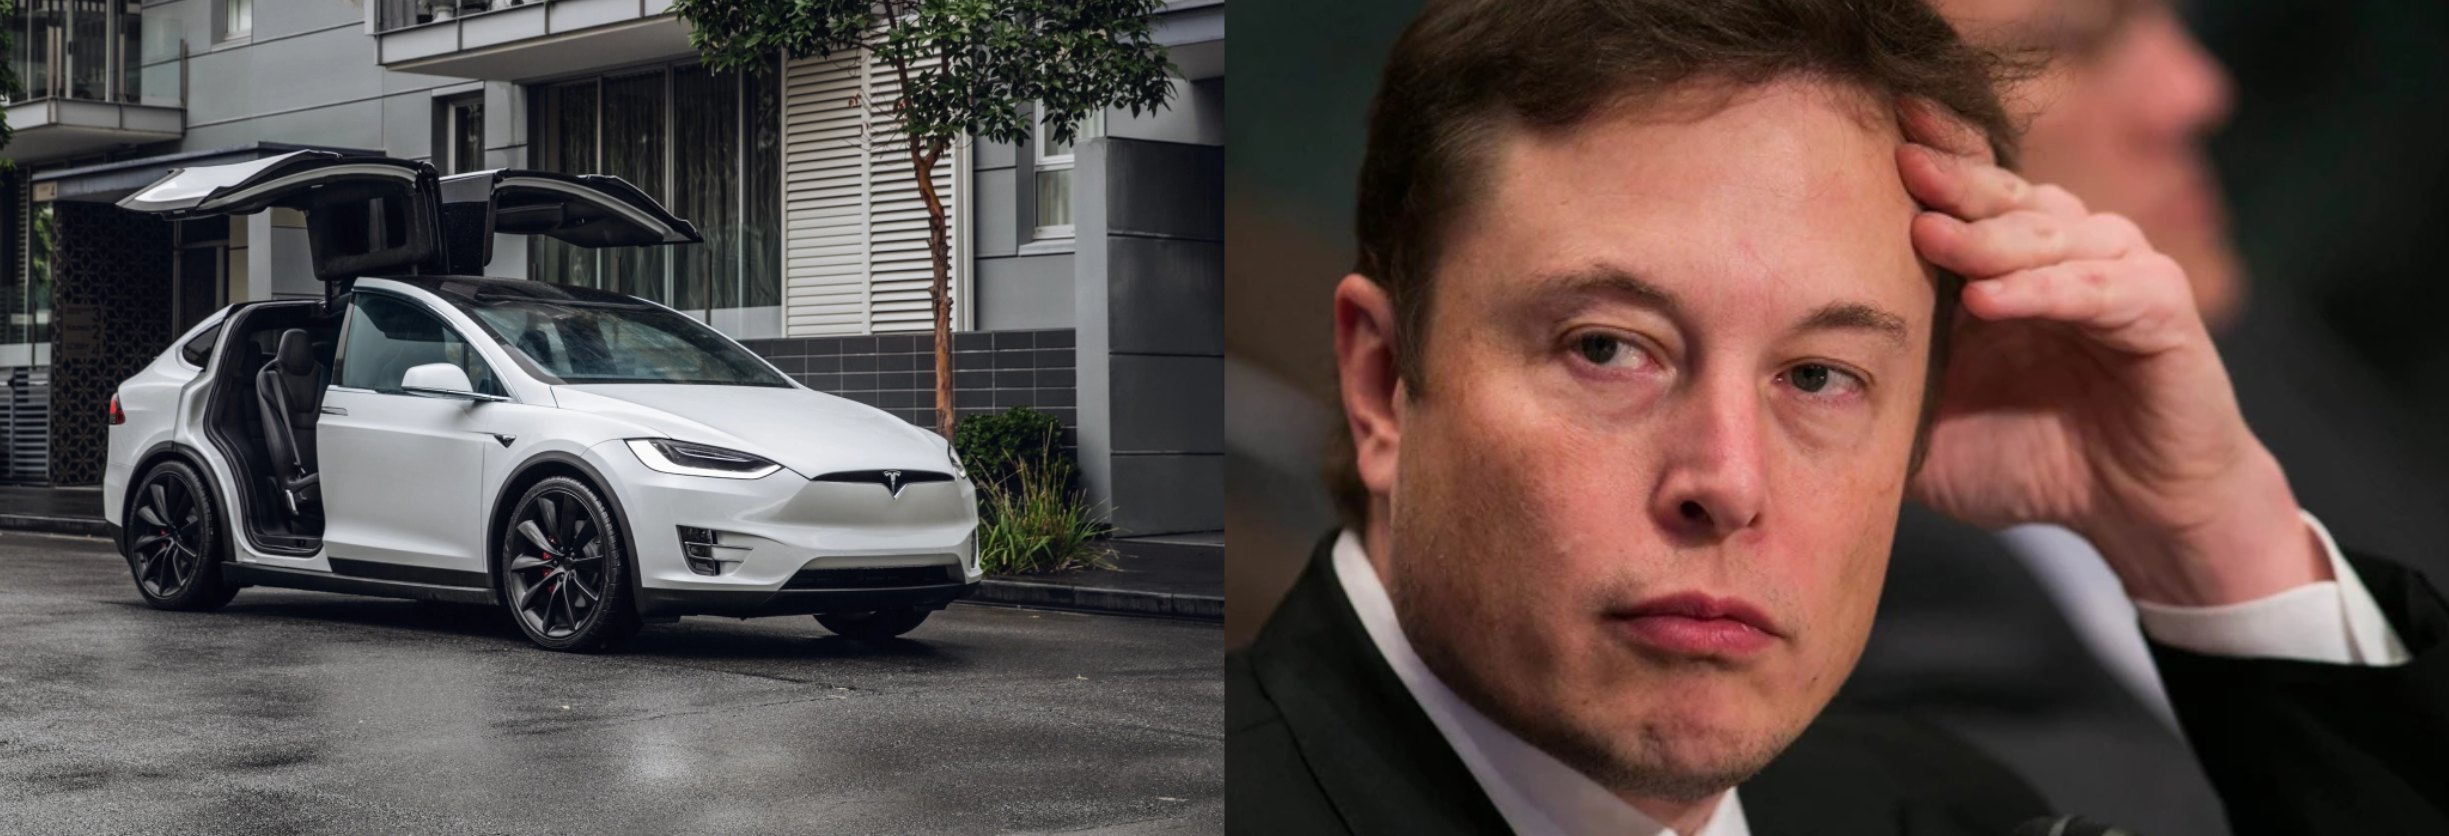 Pro Hacker Or Weak Security? 19-Year Old Hacks Over 50 Tesla Cars